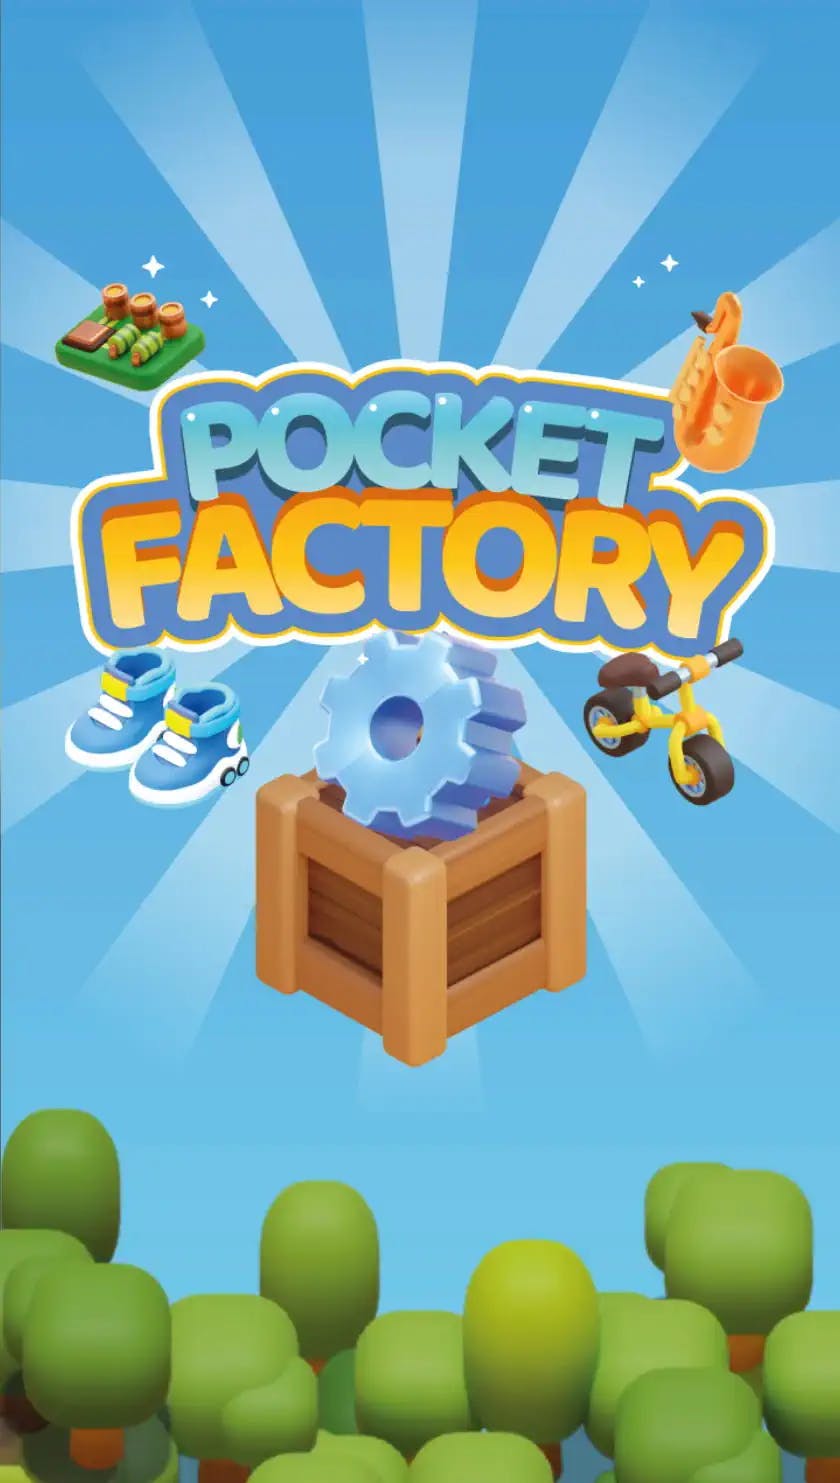 Pocket Factory Background